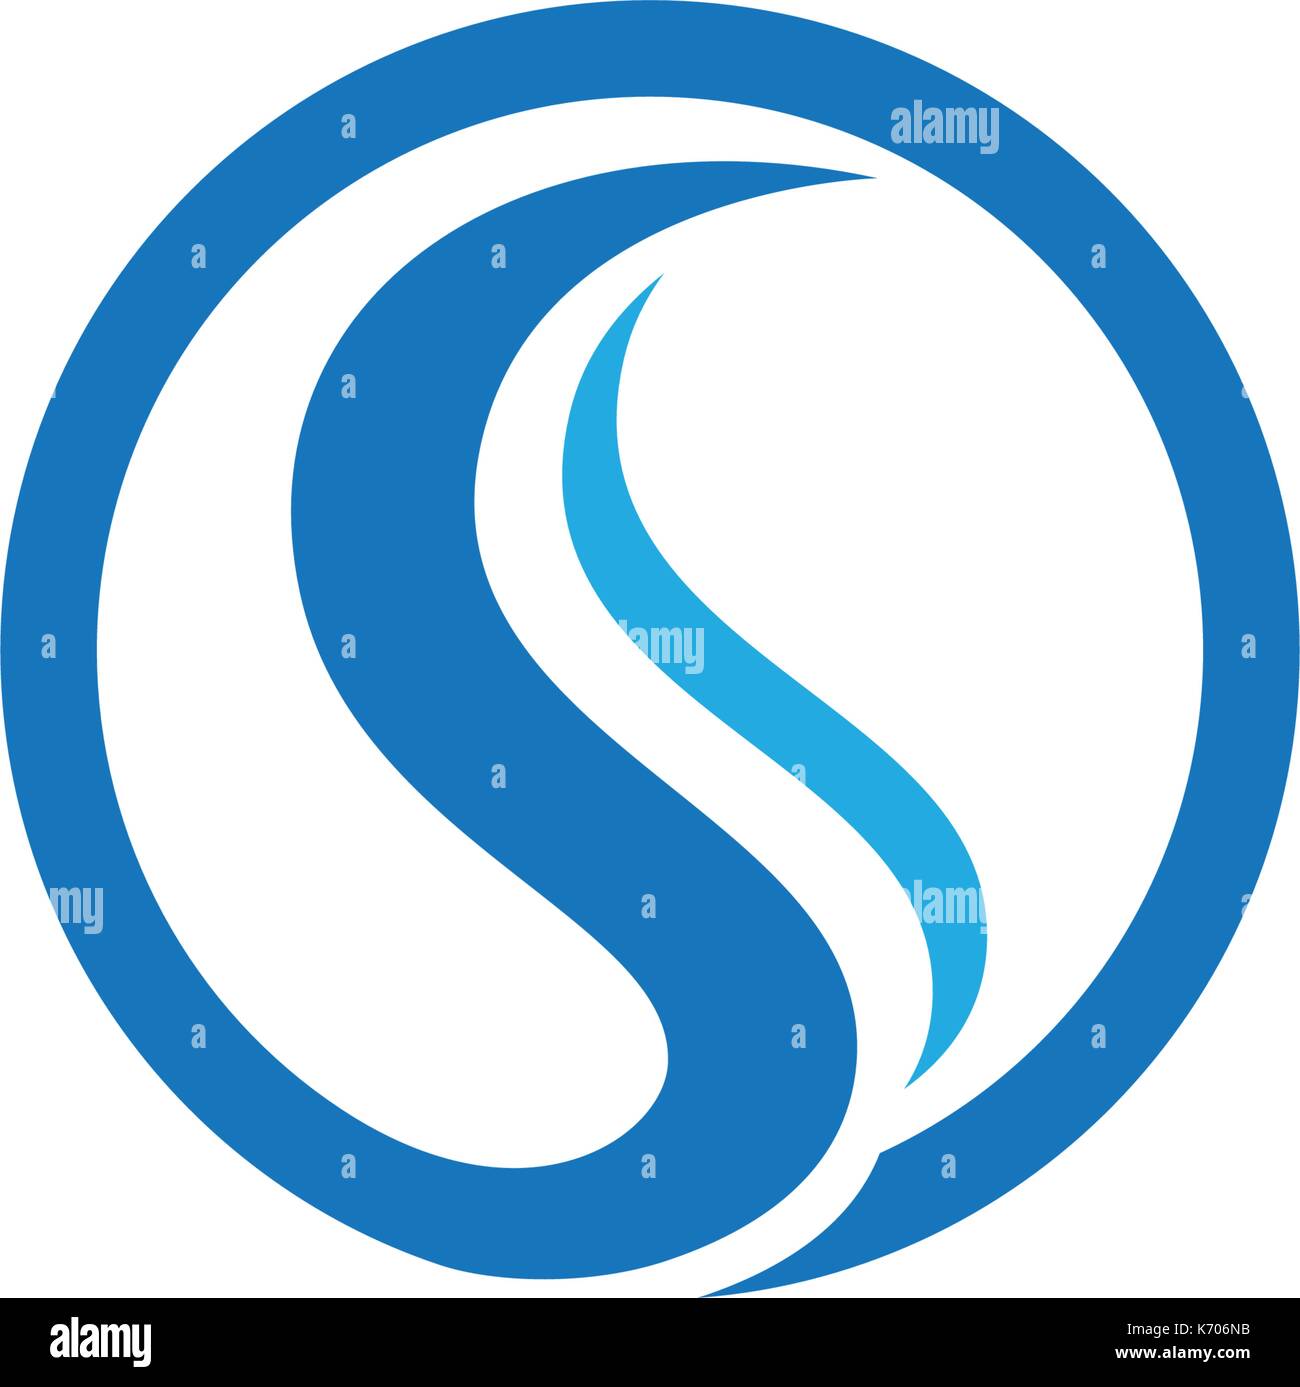 S letter logo, volume icon design template element Stock Vector